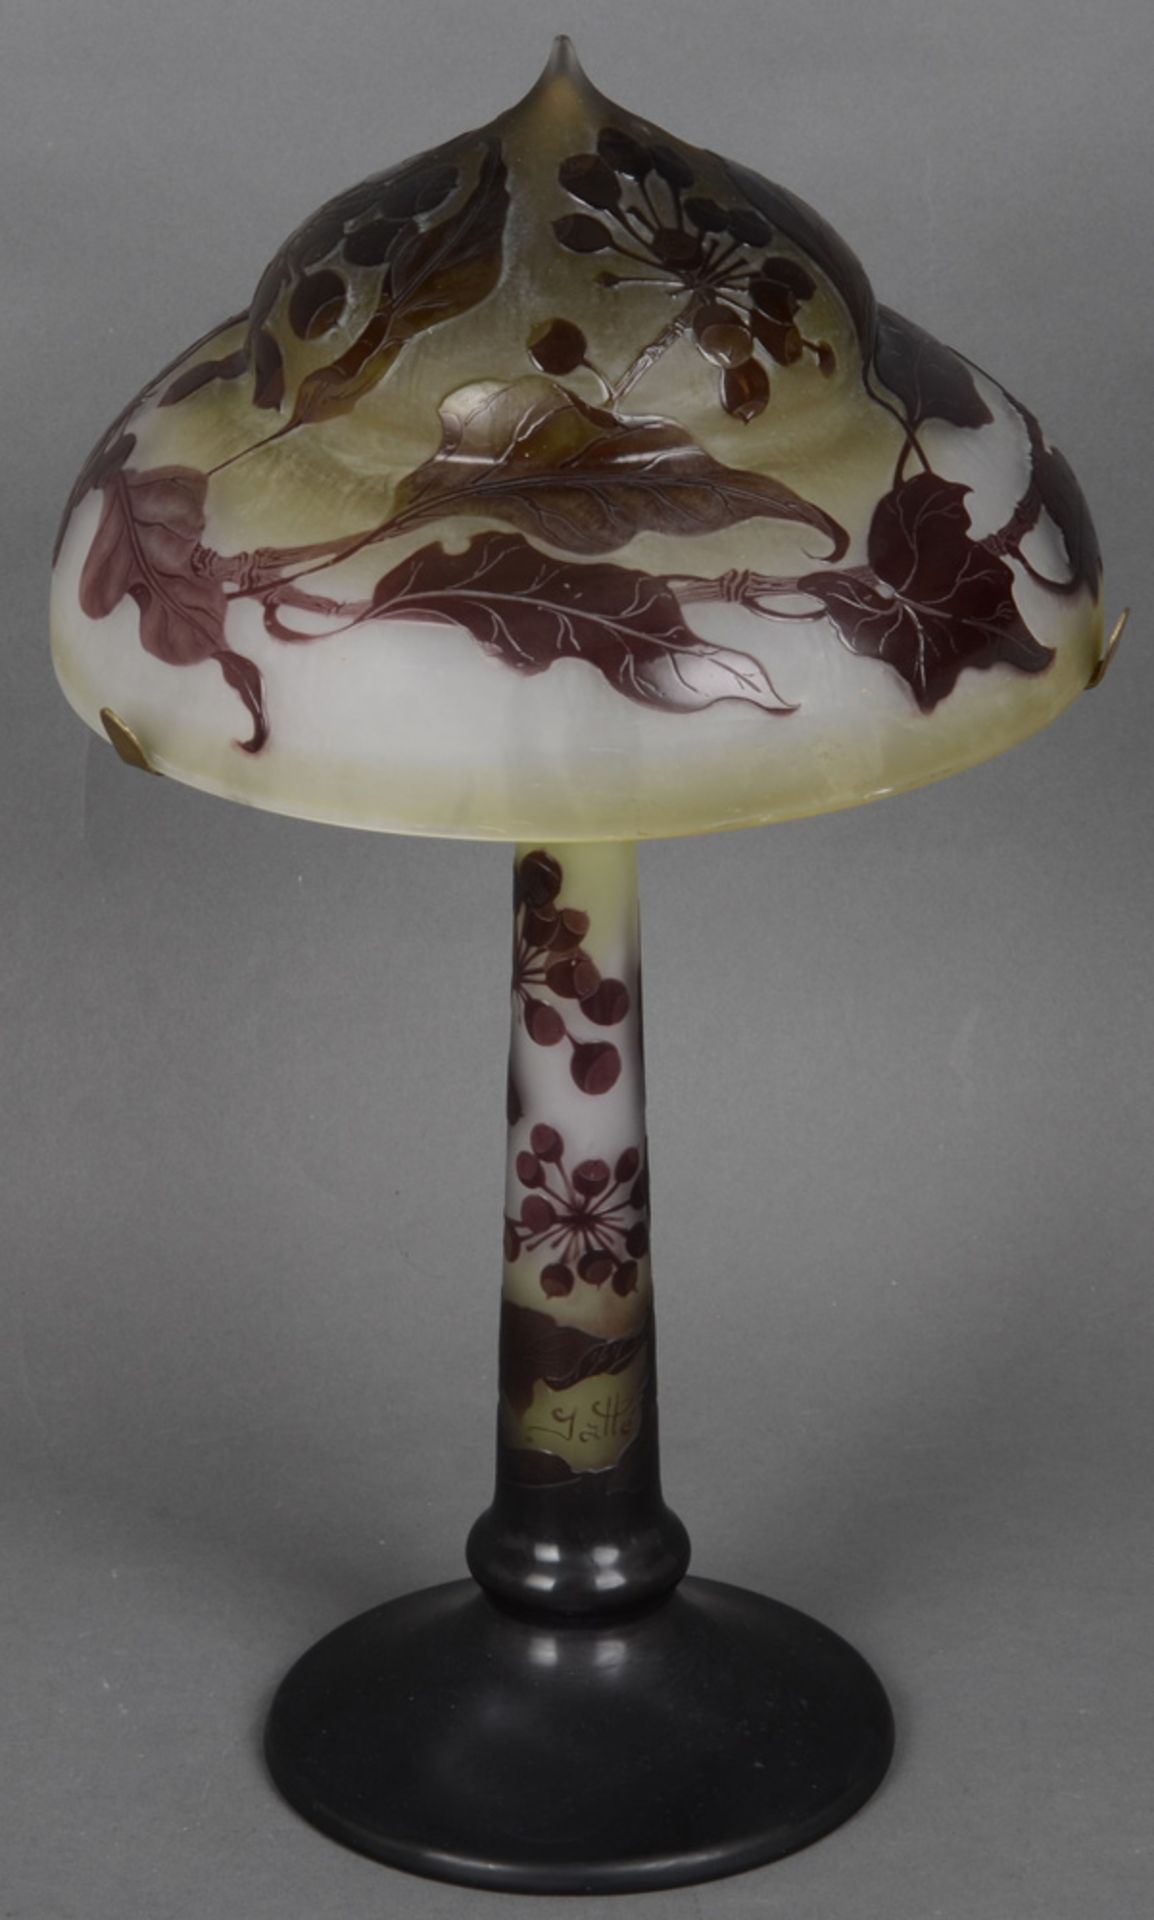 Jugendstil-Tischlampe. Nancy, Émile Gallé um 1900. Farbloses Glas, farbig überfangen, geschnitten